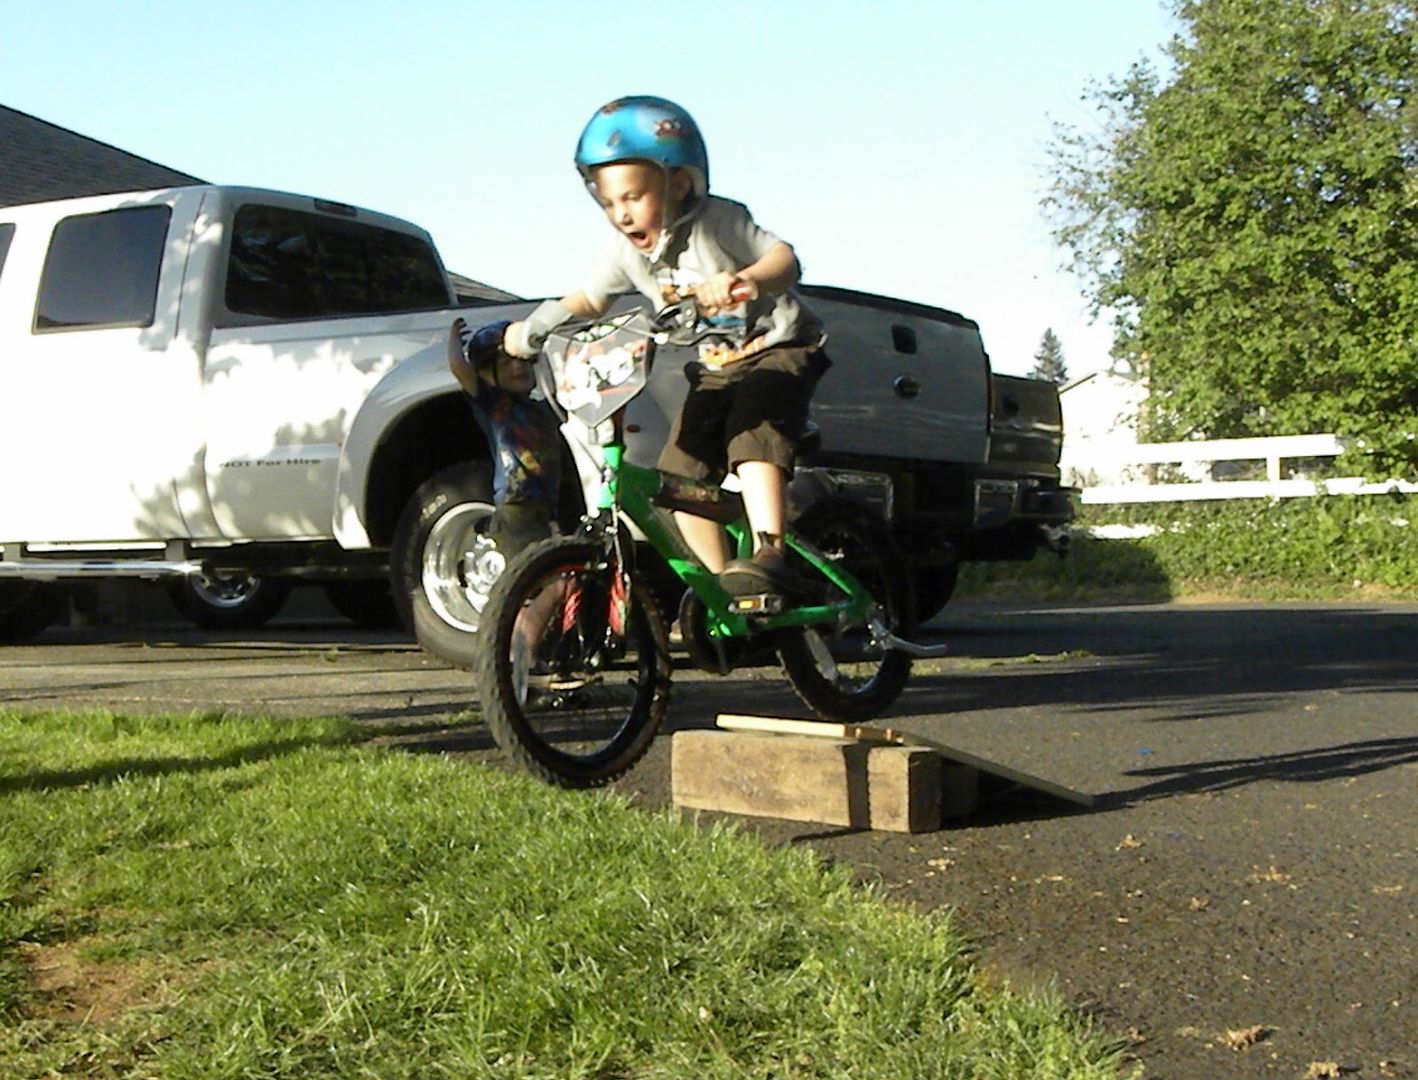 How to create a DIY small wooden bike jump for kids via Rascals, Rik Rak, and Racing's